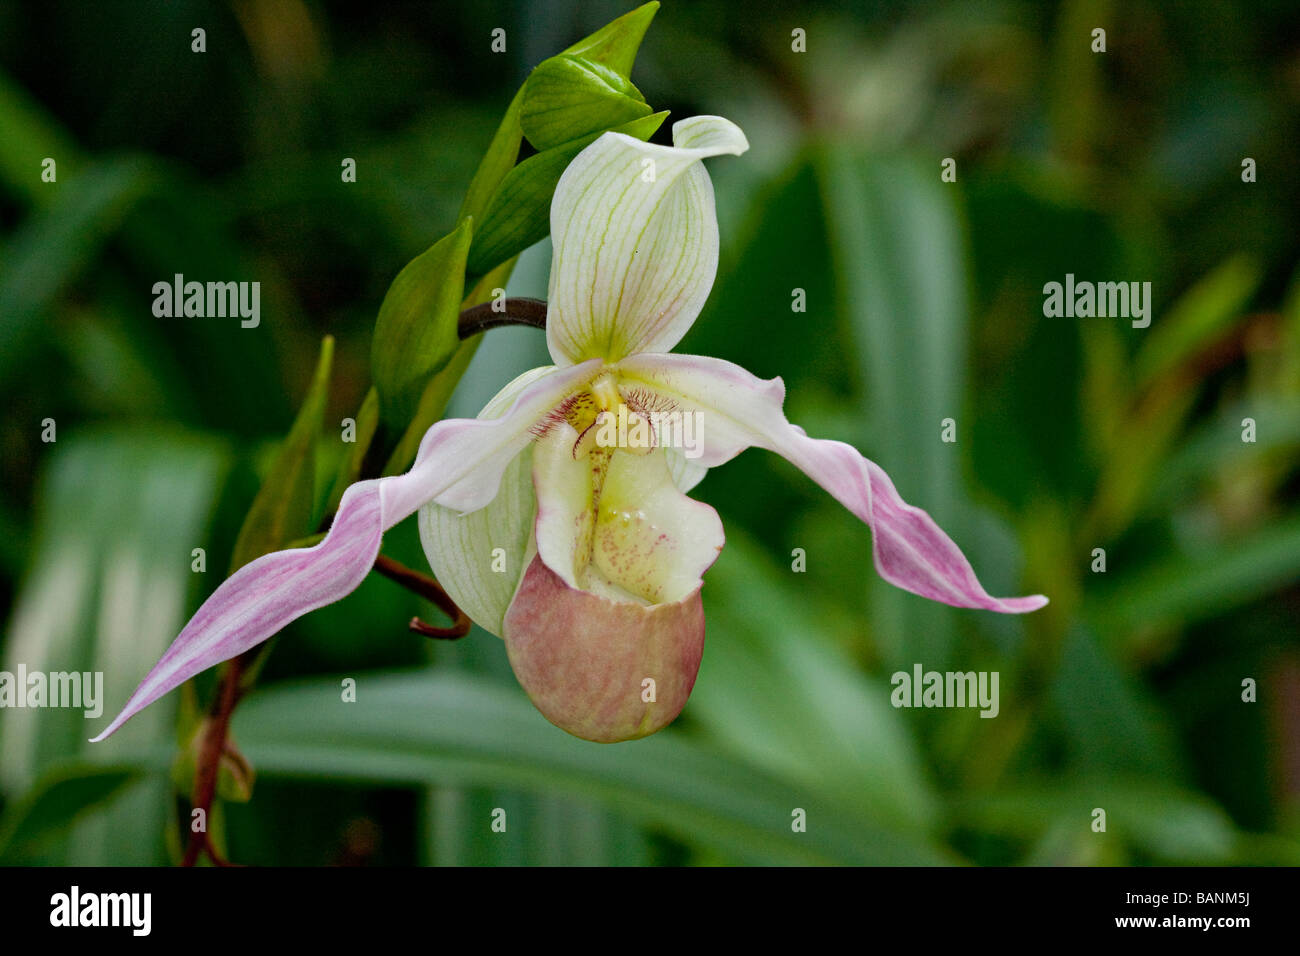 A Picture Of A Slipper Orchid Phragmipedium X Sedenii Candidulum Stock Photo Alamy